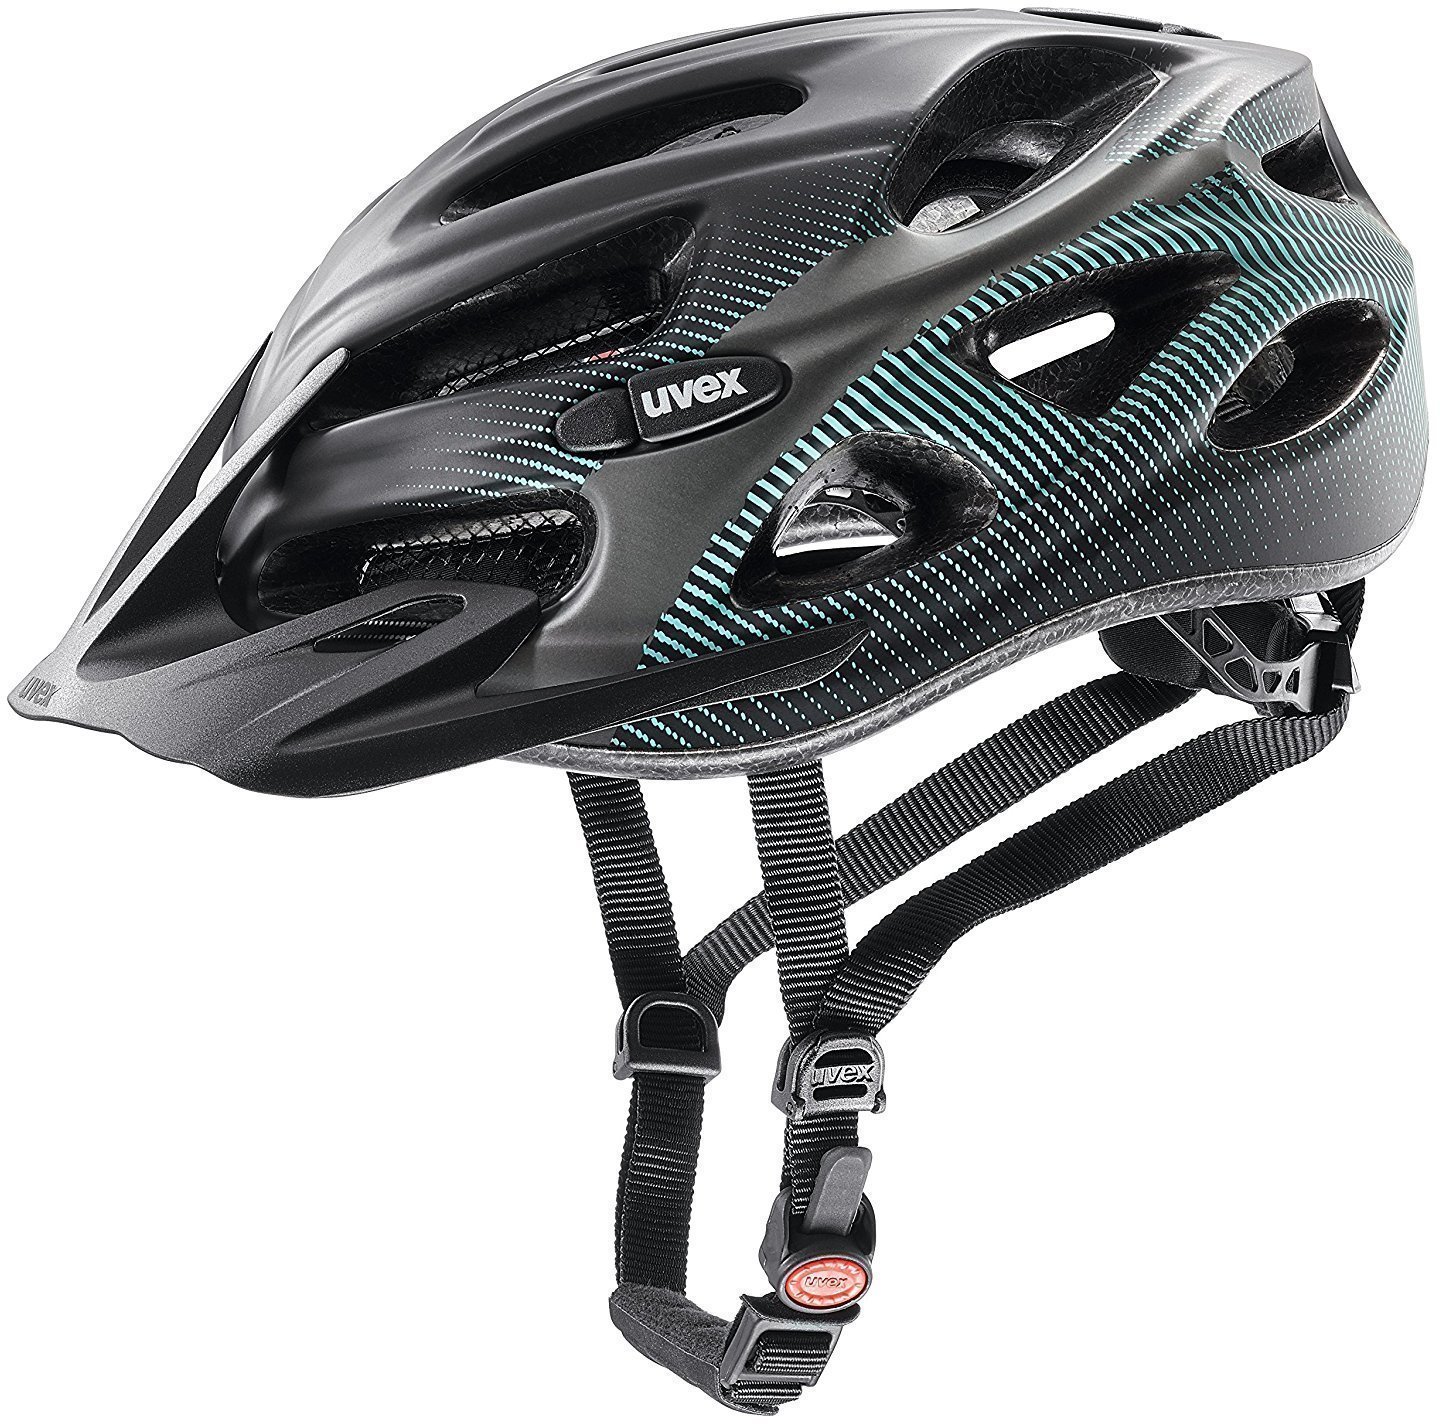 Bike Helmet UVEX Onyx CC Black/Teal Matt 52-57 Bike Helmet